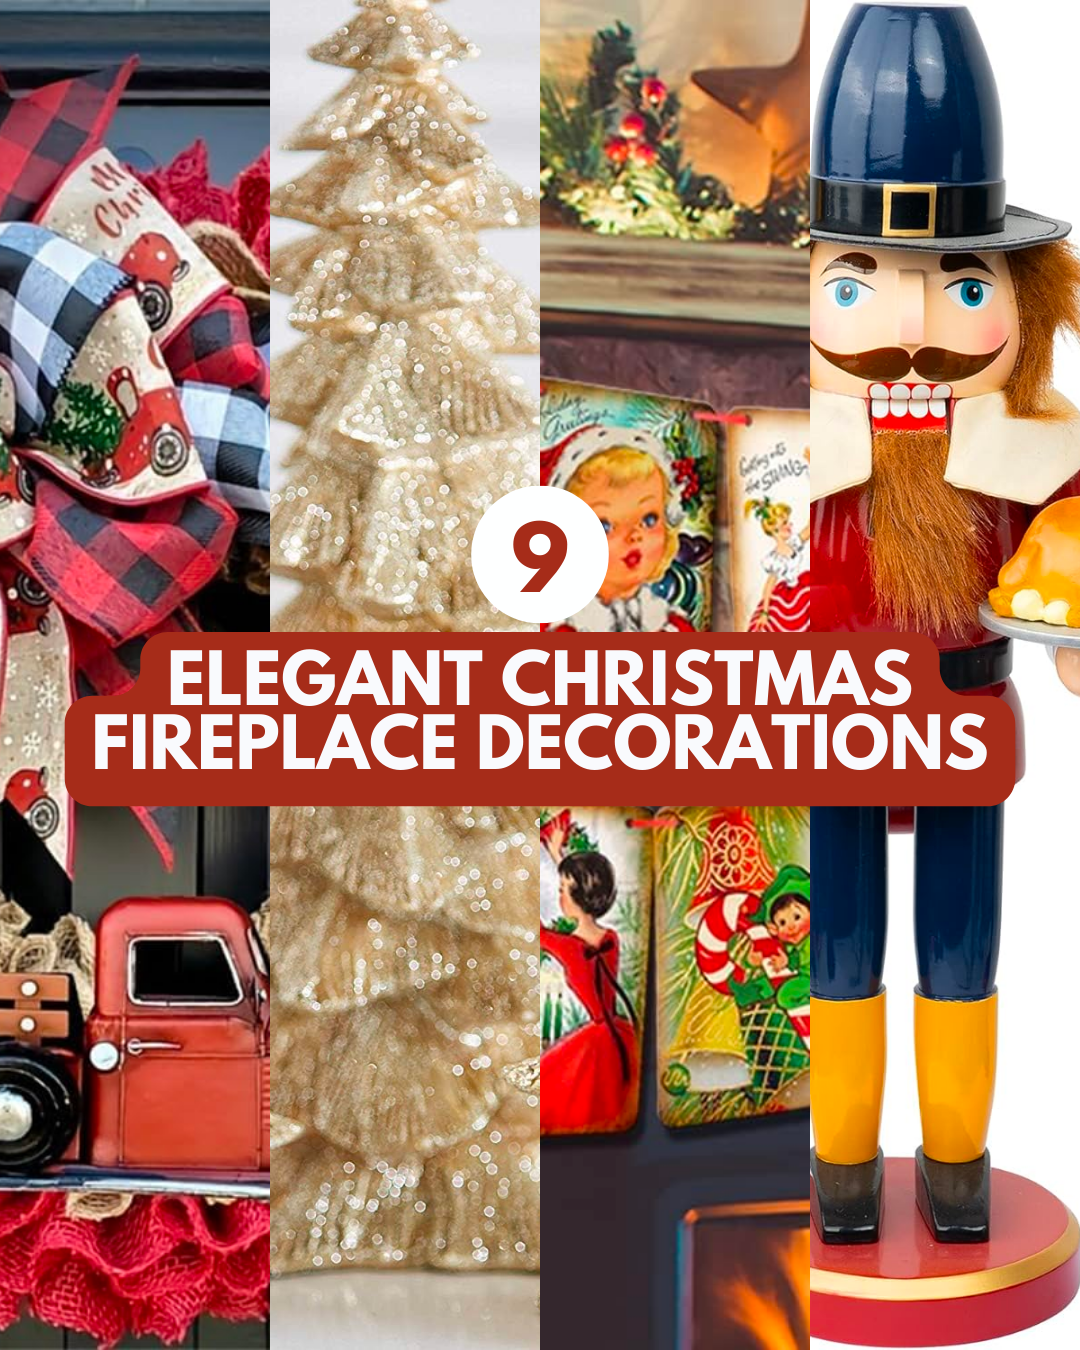 13 Elegant Christmas Fireplace Decorations